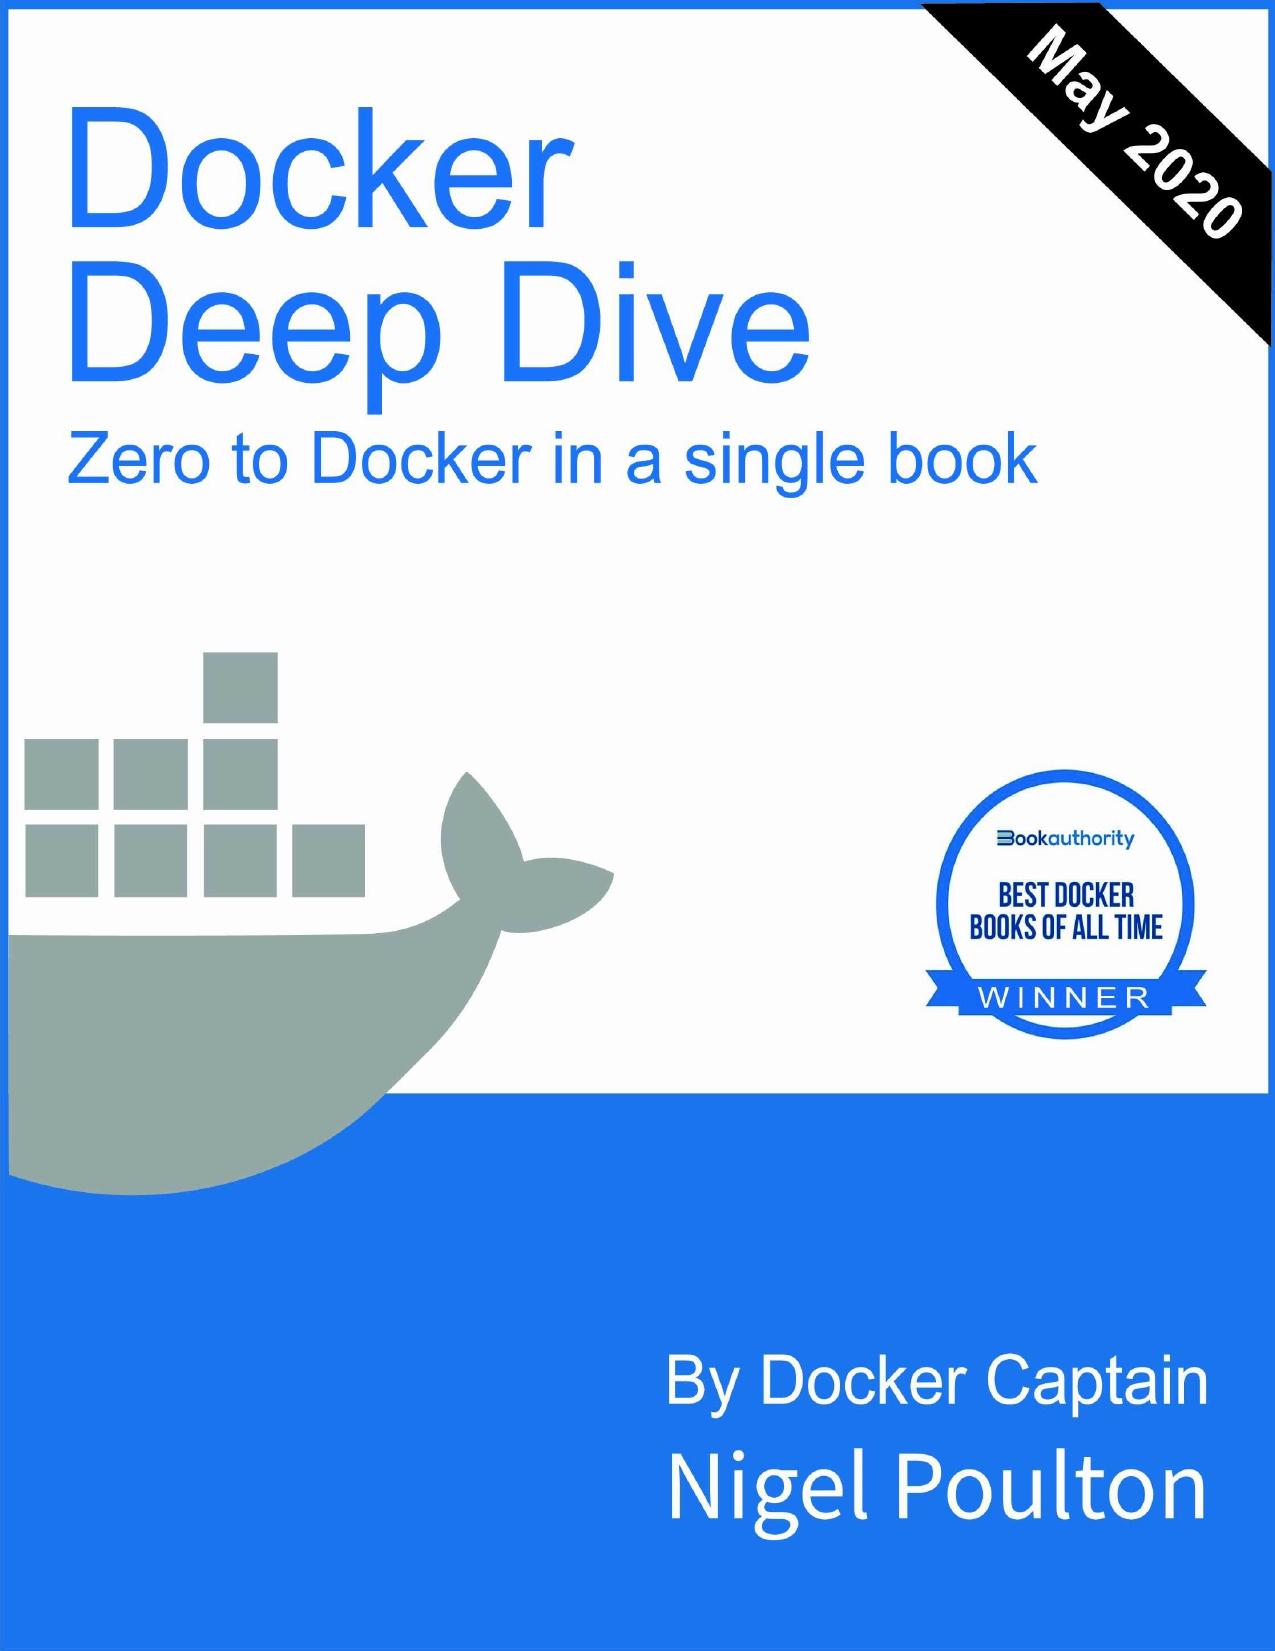 Docker Deep Dive